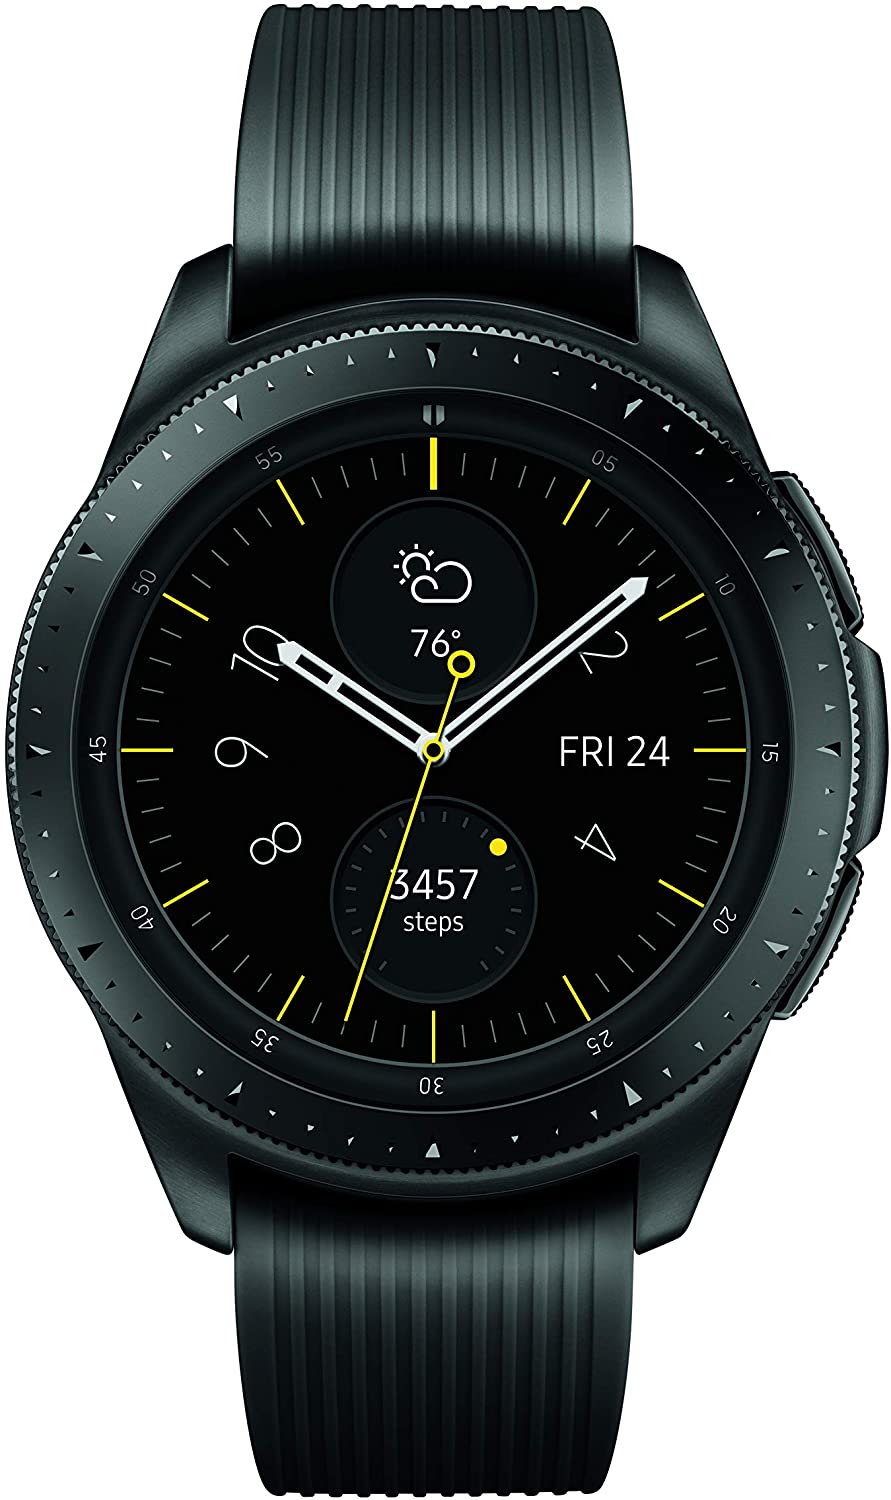 Samsung Galaxy Watch smartwatch (42mm, GPS, Bluetooth) – Midnight Black